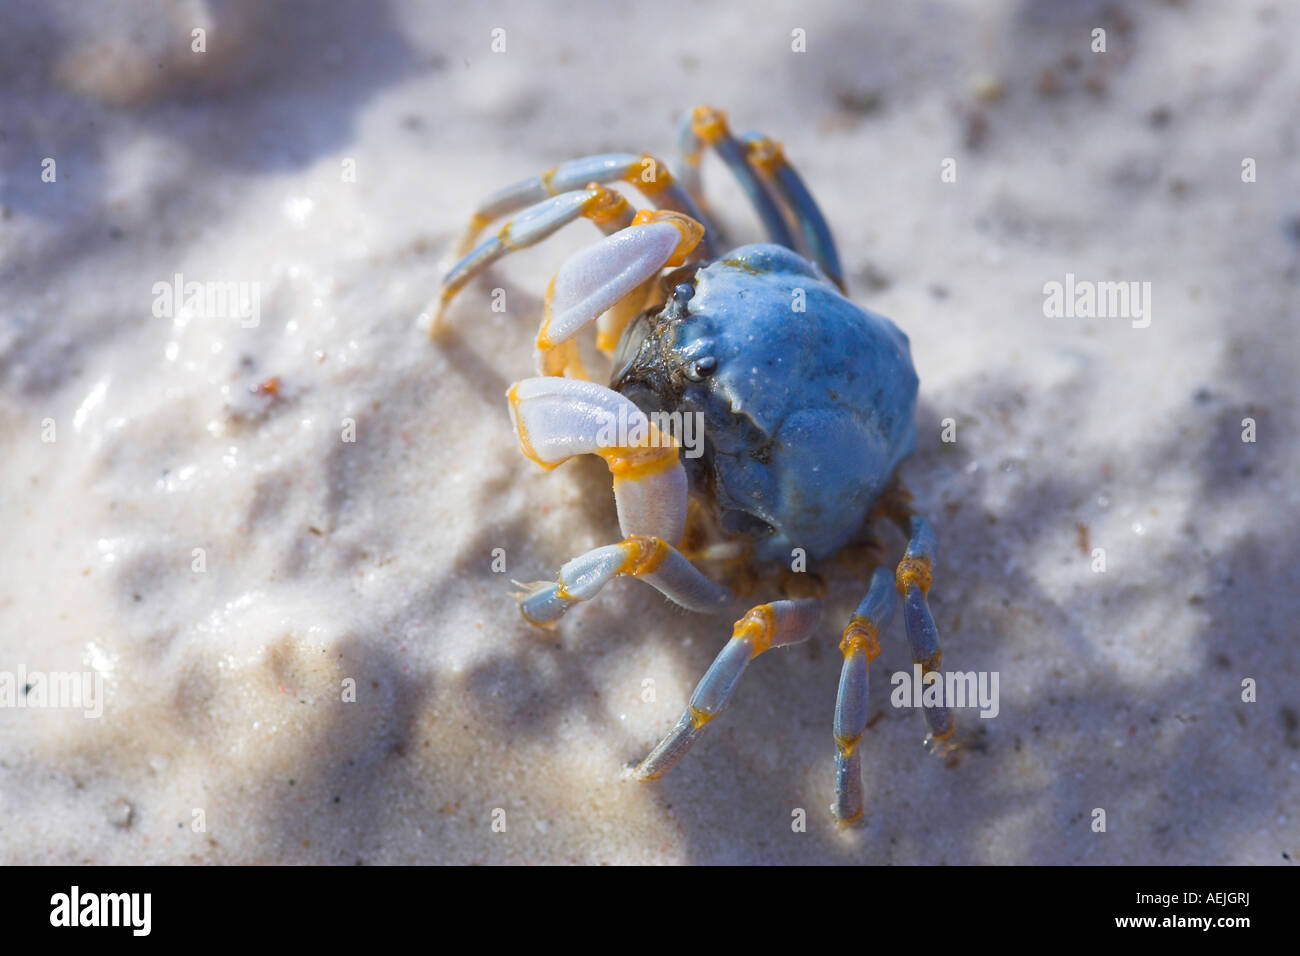 Soldat-Krabben in den Sand, Philippinen Stockfoto